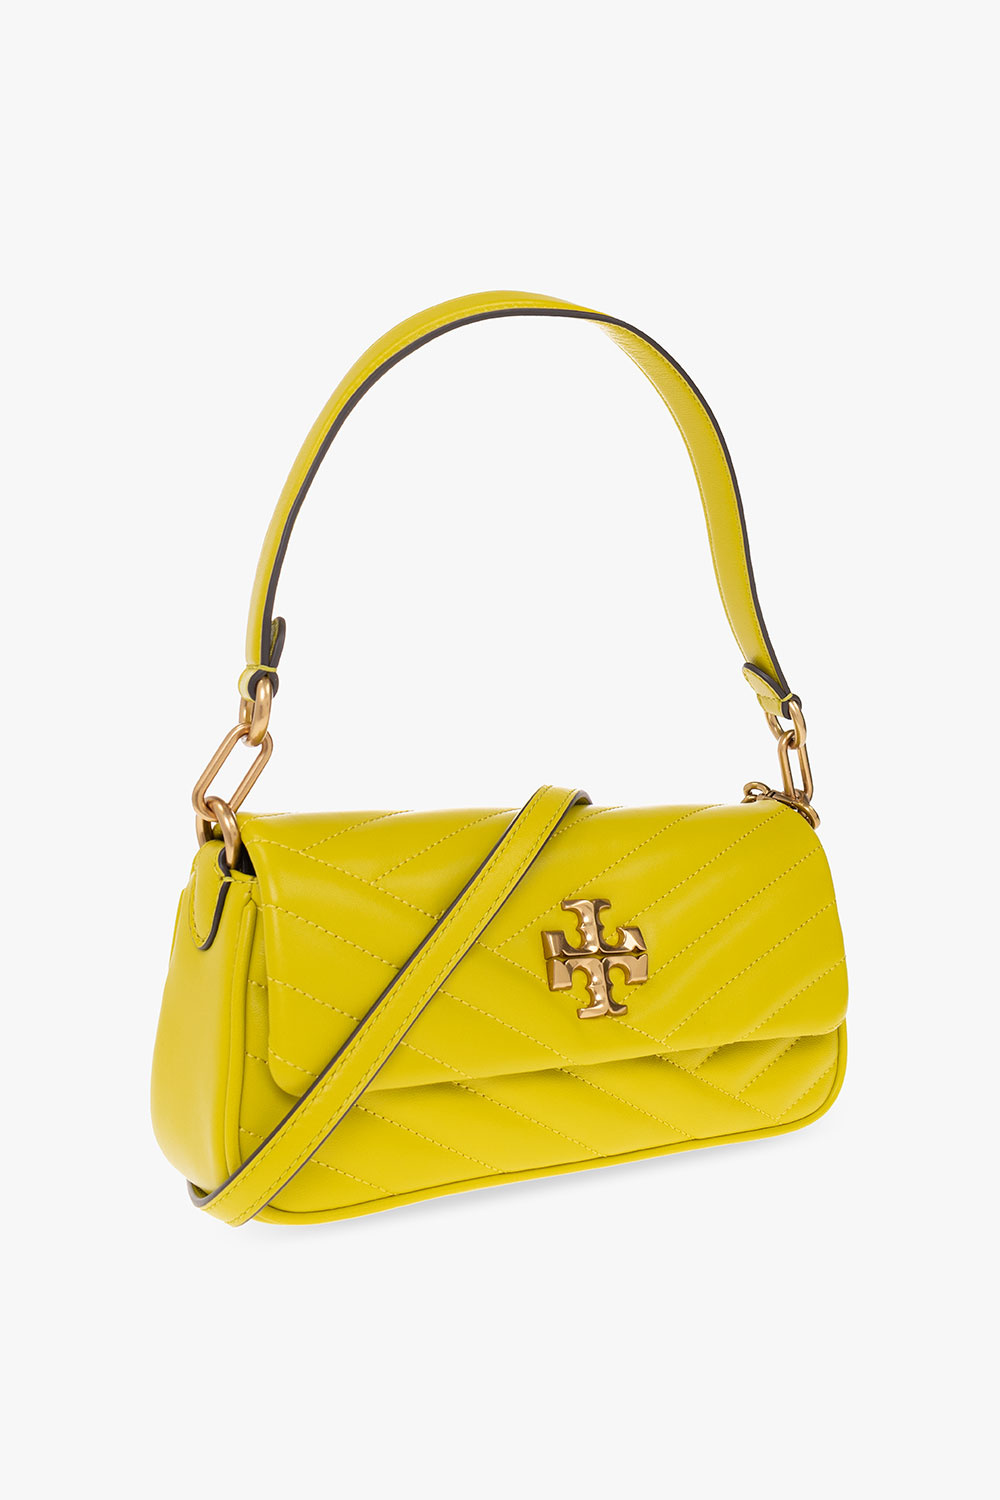 Tory Burch Small Kira Crossbody Bag - Yellow